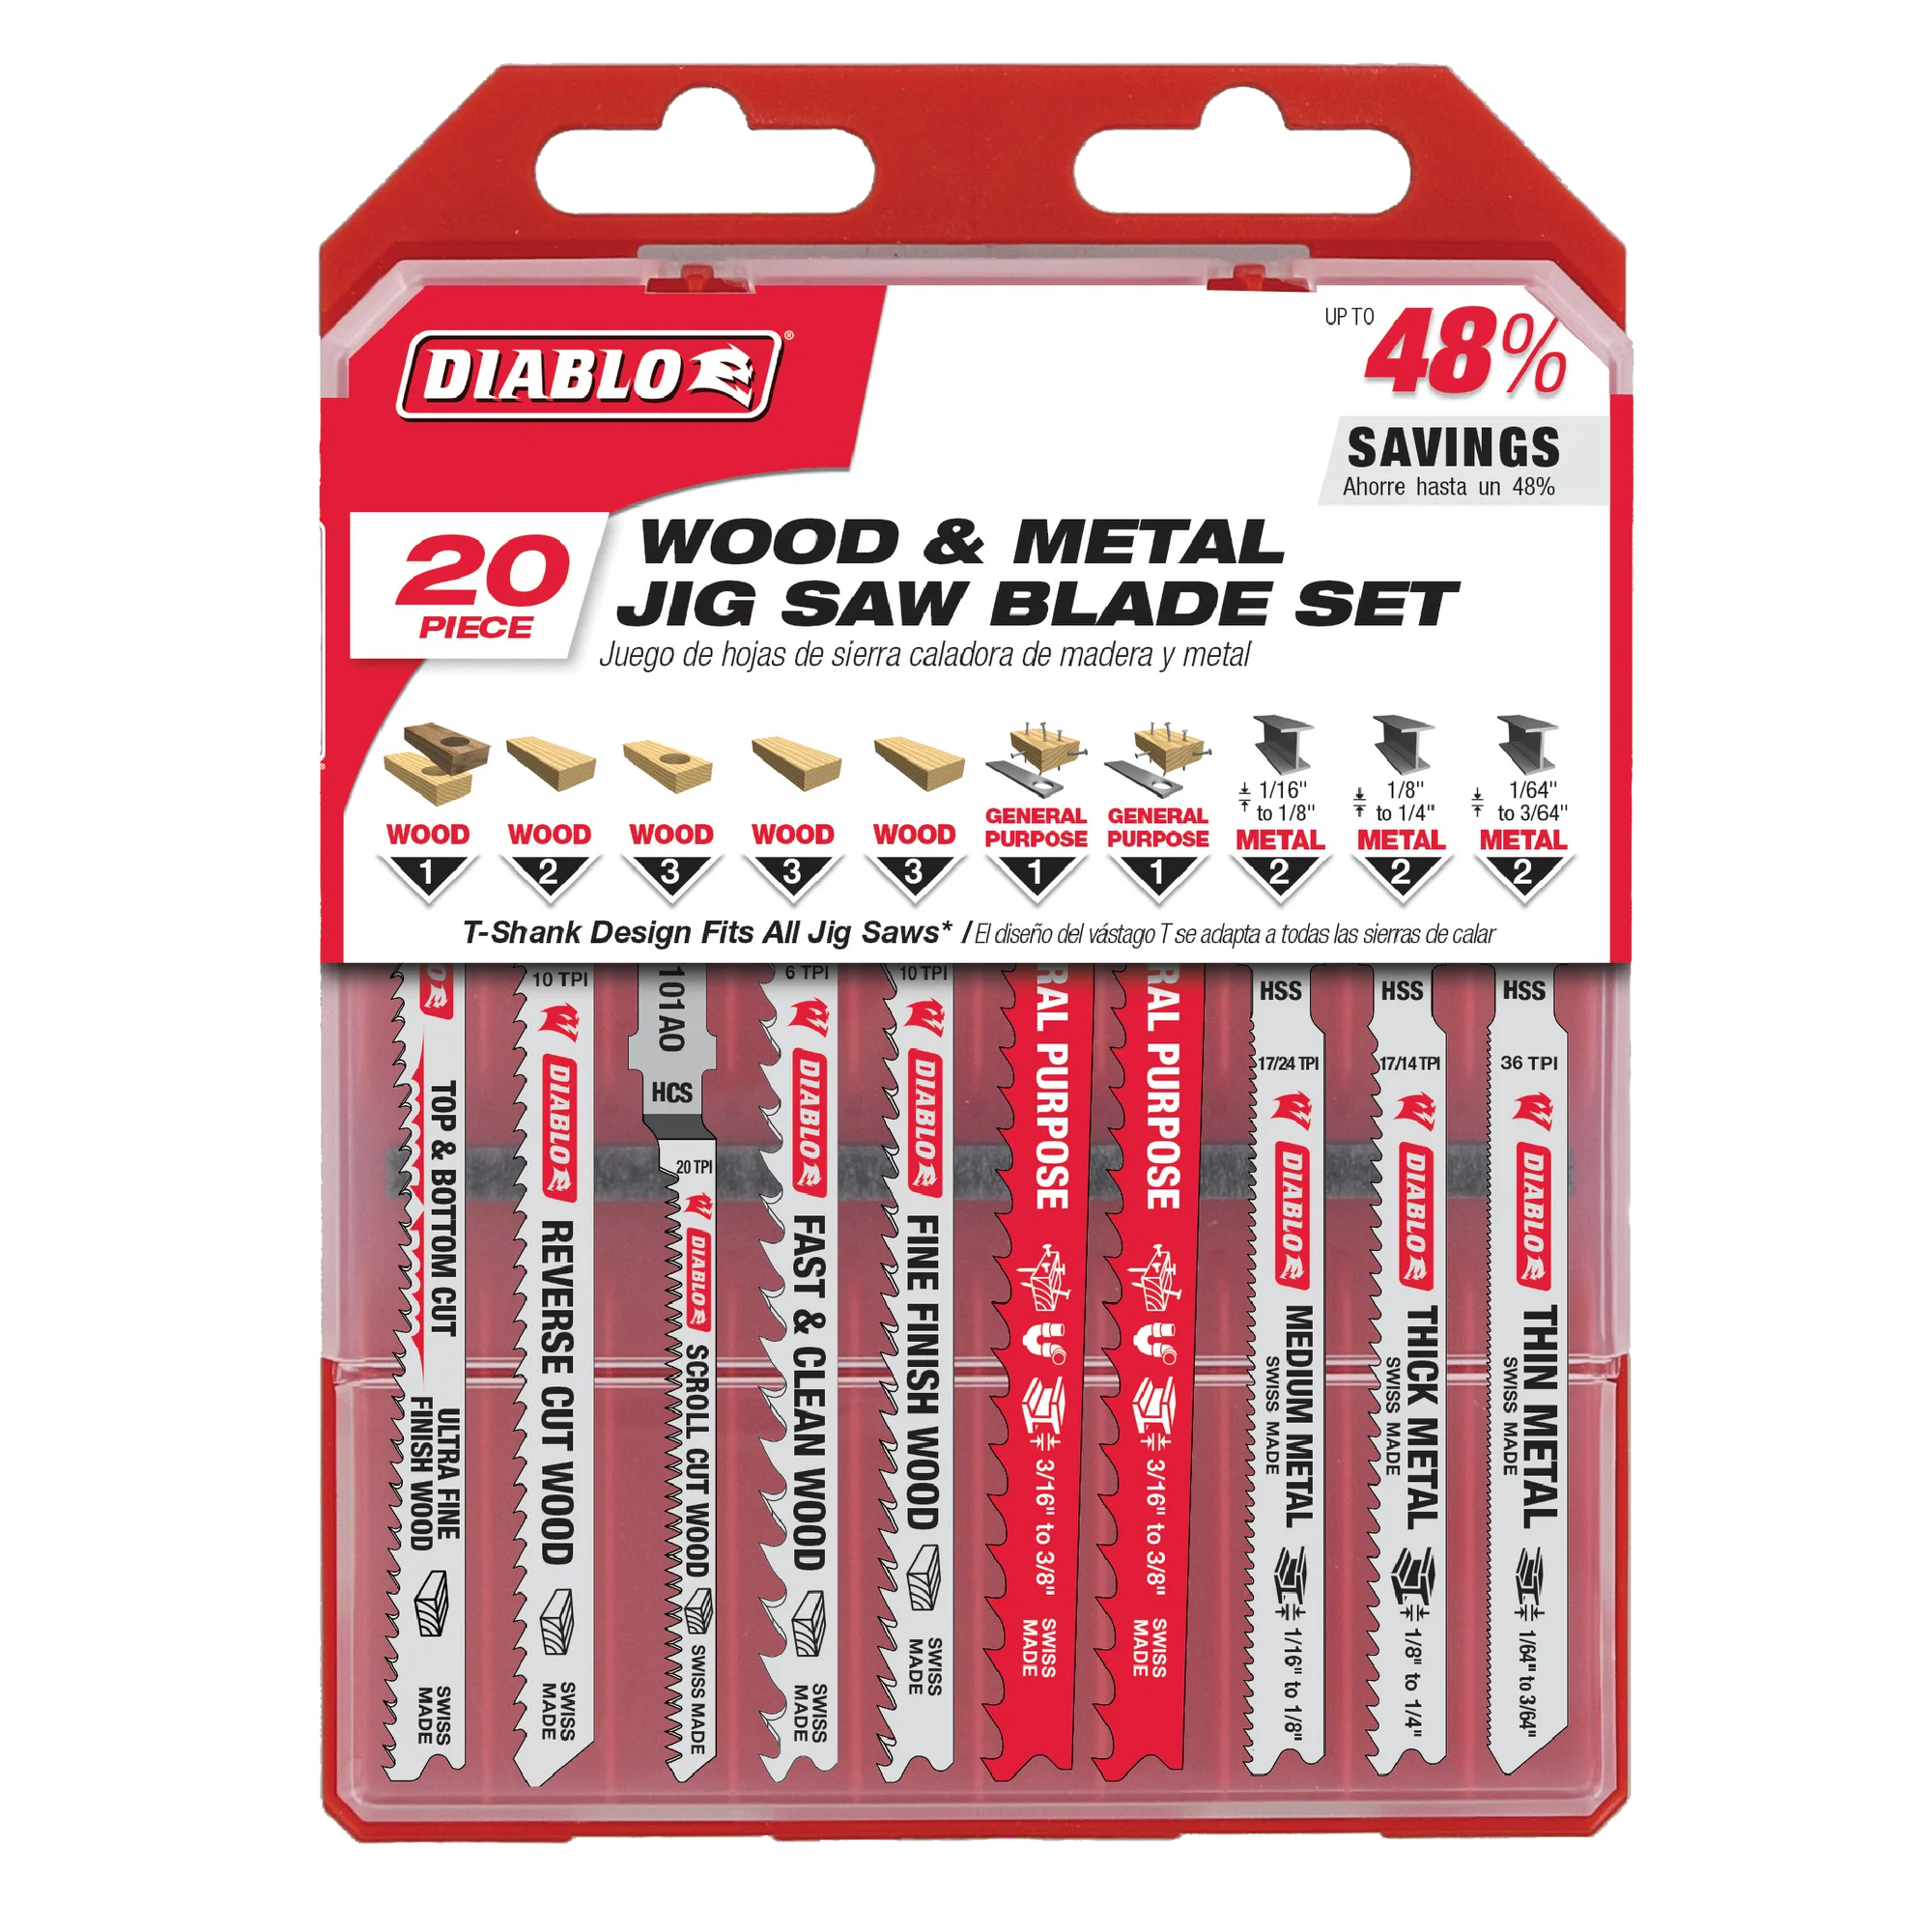 Diablo DJT20S - 20 pc T-Shank Jig Saw Blade Set for Wood & Metal